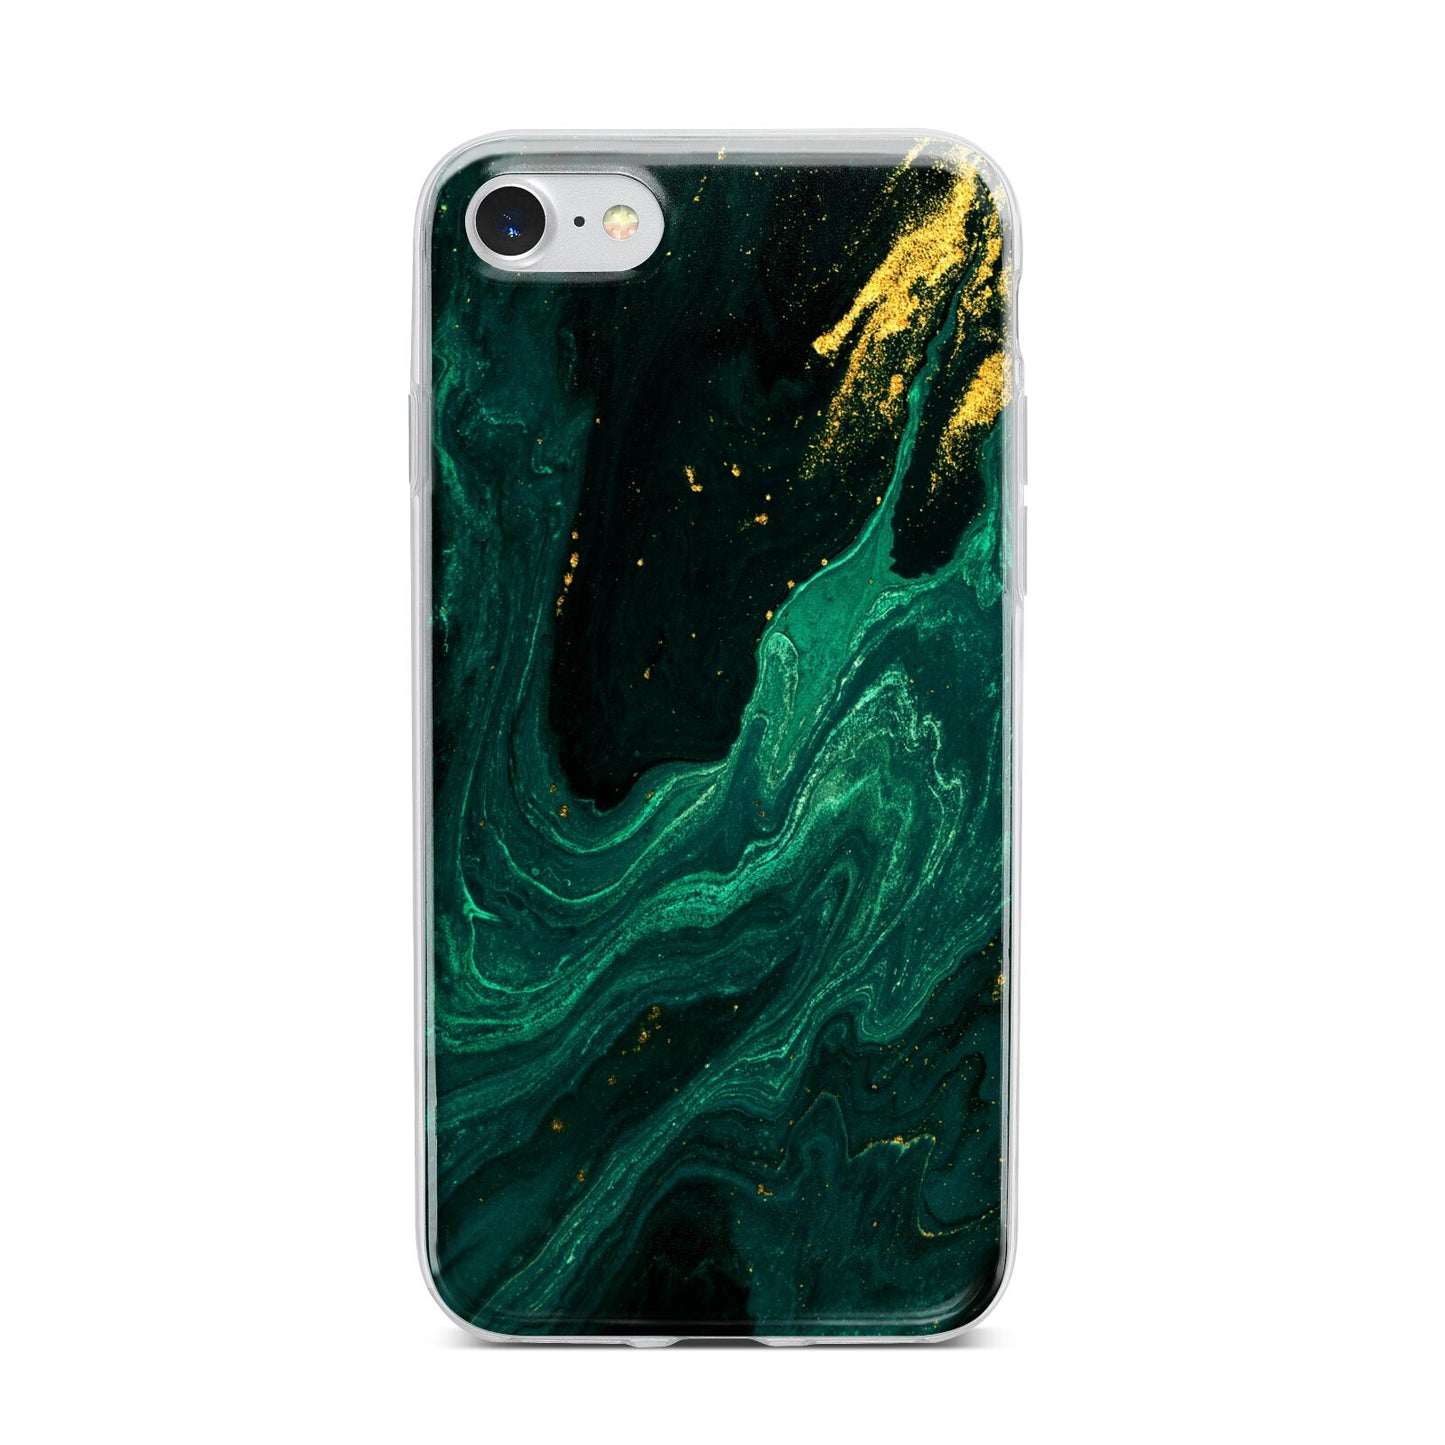 Emerald Green iPhone 7 Bumper Case on Silver iPhone